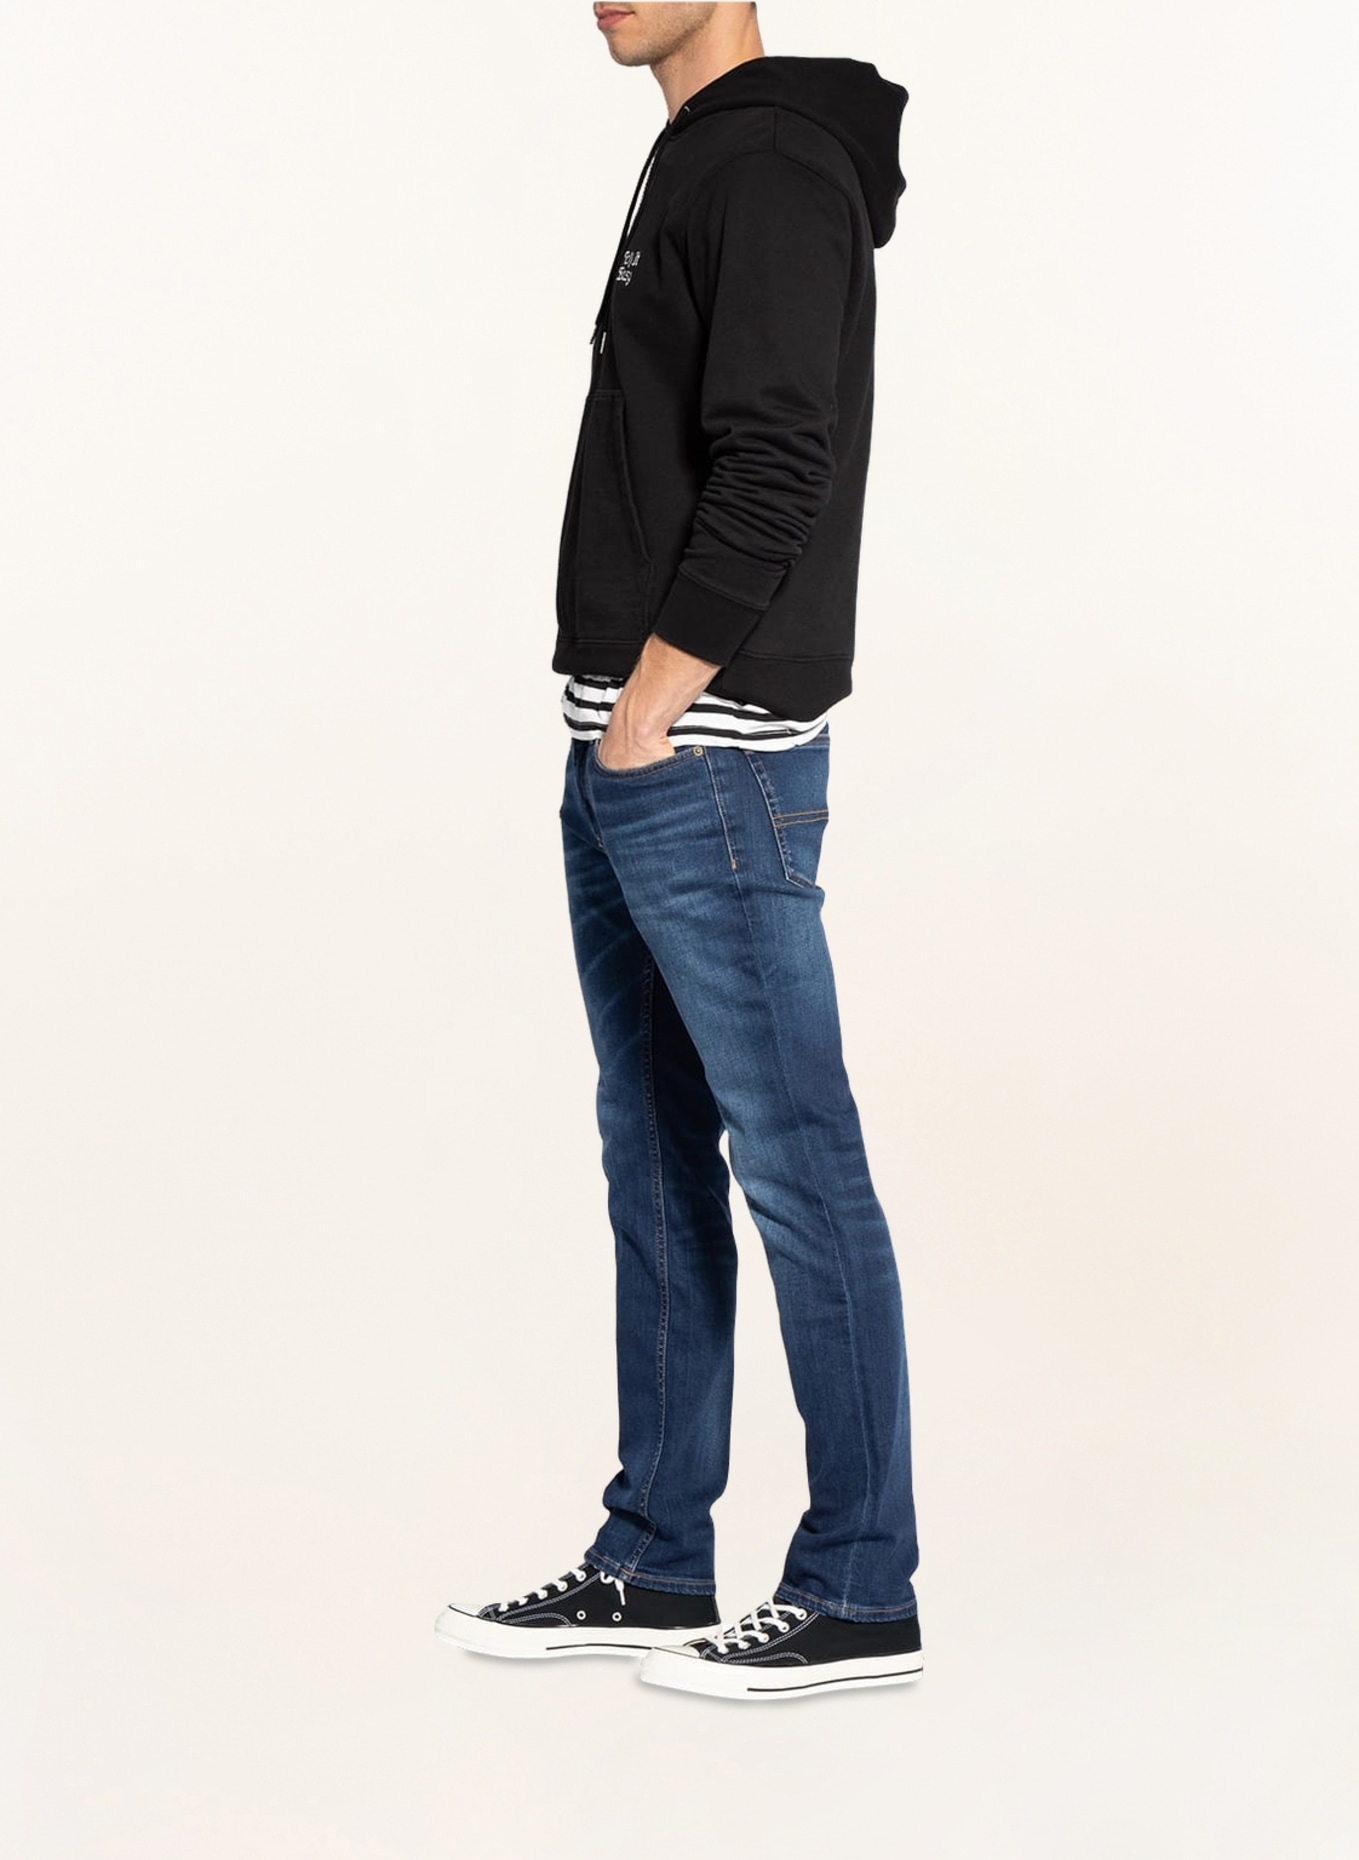 TOMMY JEANS Jeans SCANTON slim fit in 1bk aspen dark blue stretch